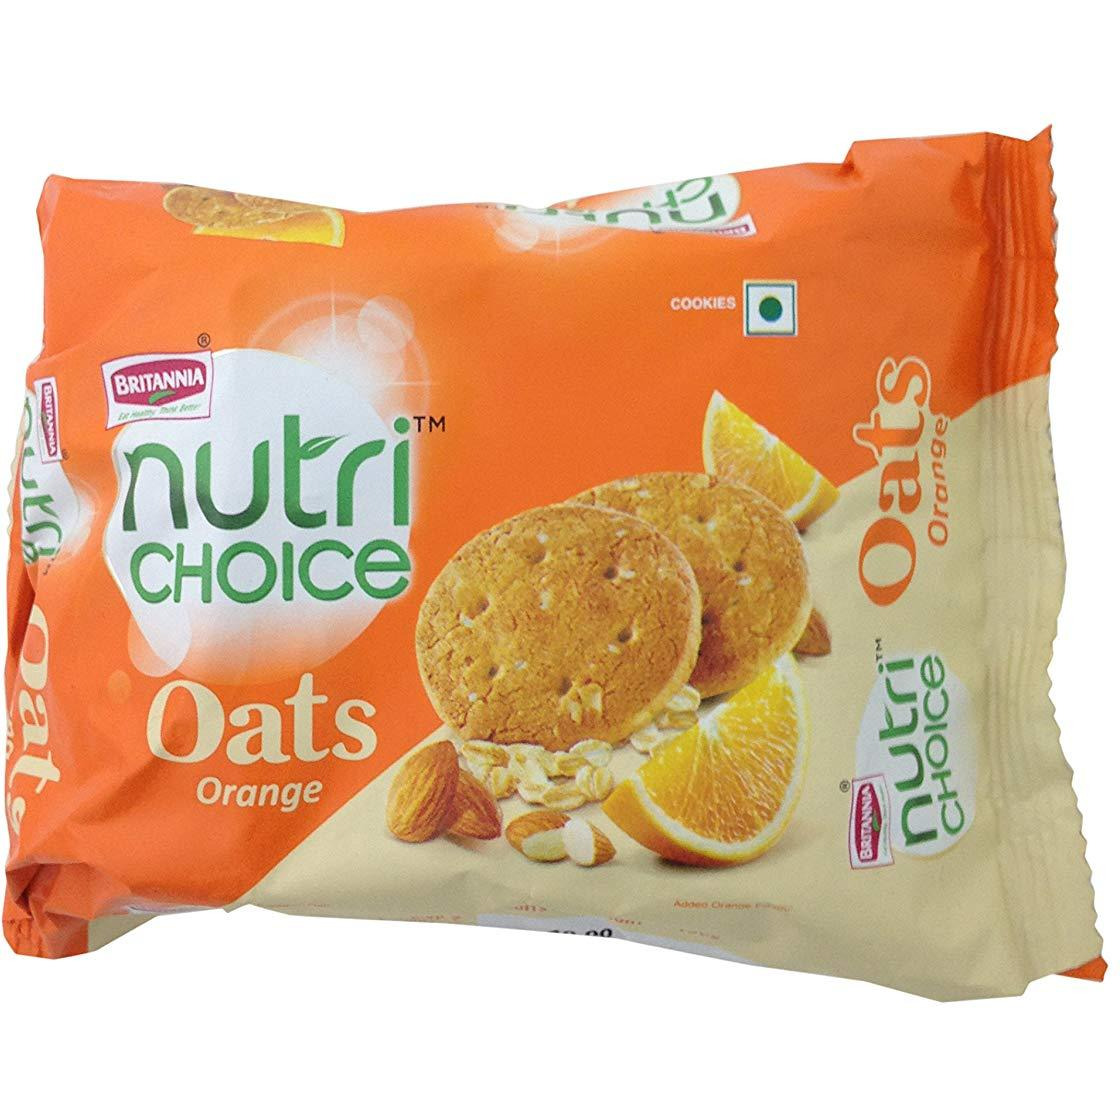 Case of 8 - Britannia Oats Orange Cookies - 450 Gm (15.87 Oz)